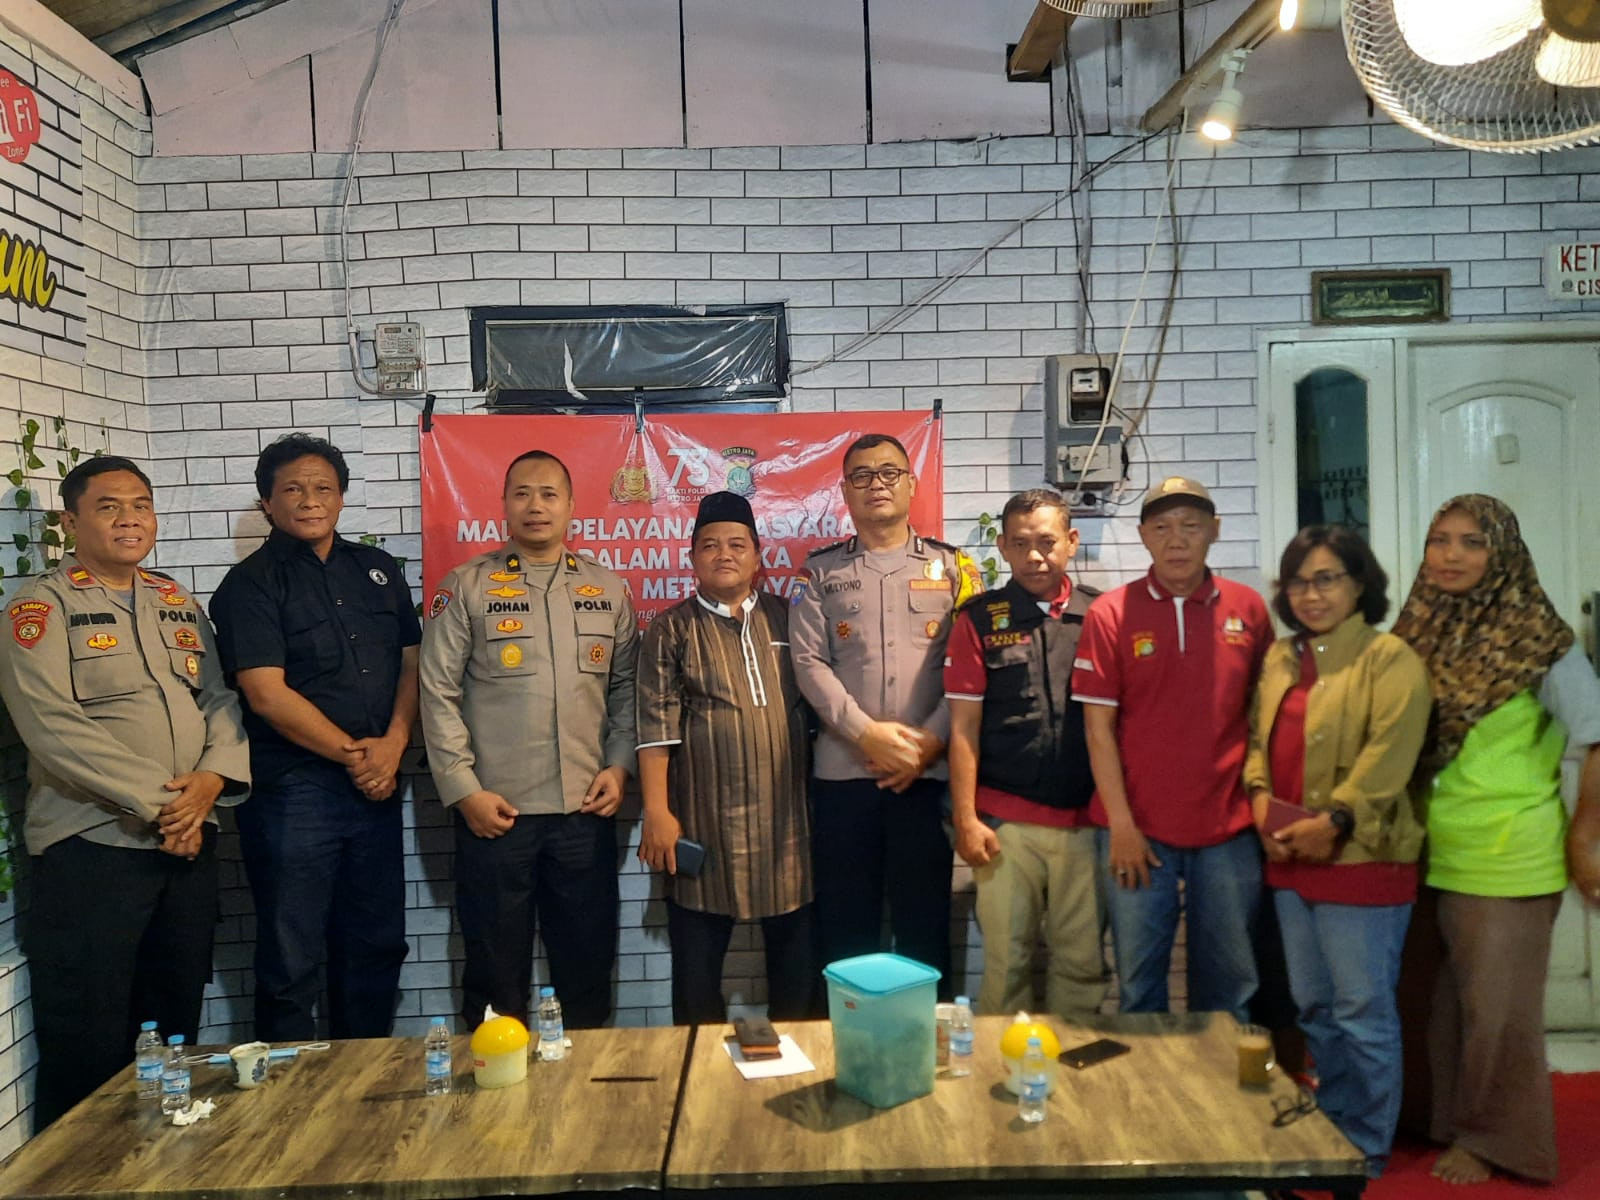 Antisipasi Aksi Tawuran Pelajar, Polres Metro Depok Gelar Malam Pelayanan Masyarakat - JPNN.com Jabar